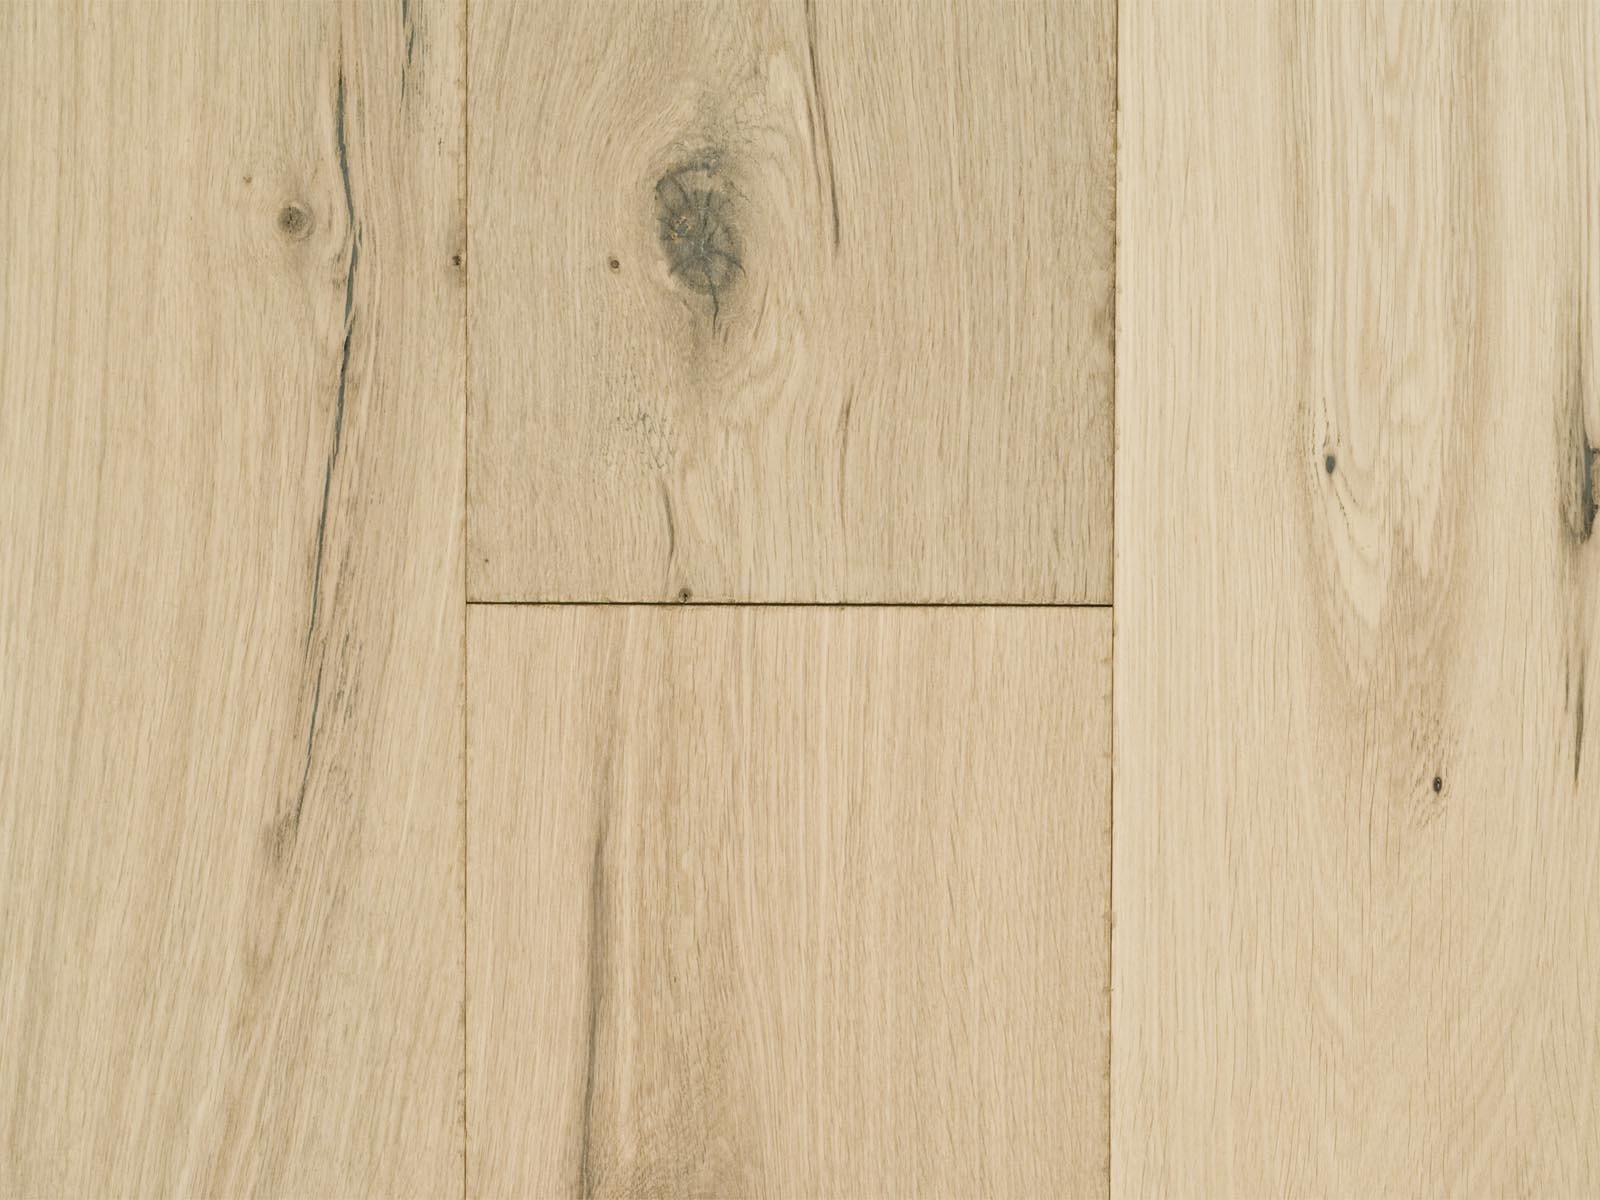 11 Great Hardwood Floor Refinishing Windsor Ontario 2022 free download hardwood floor refinishing windsor ontario of provenza hardwood flooring houston tx discount premium wood floors with regard to windsor european oak